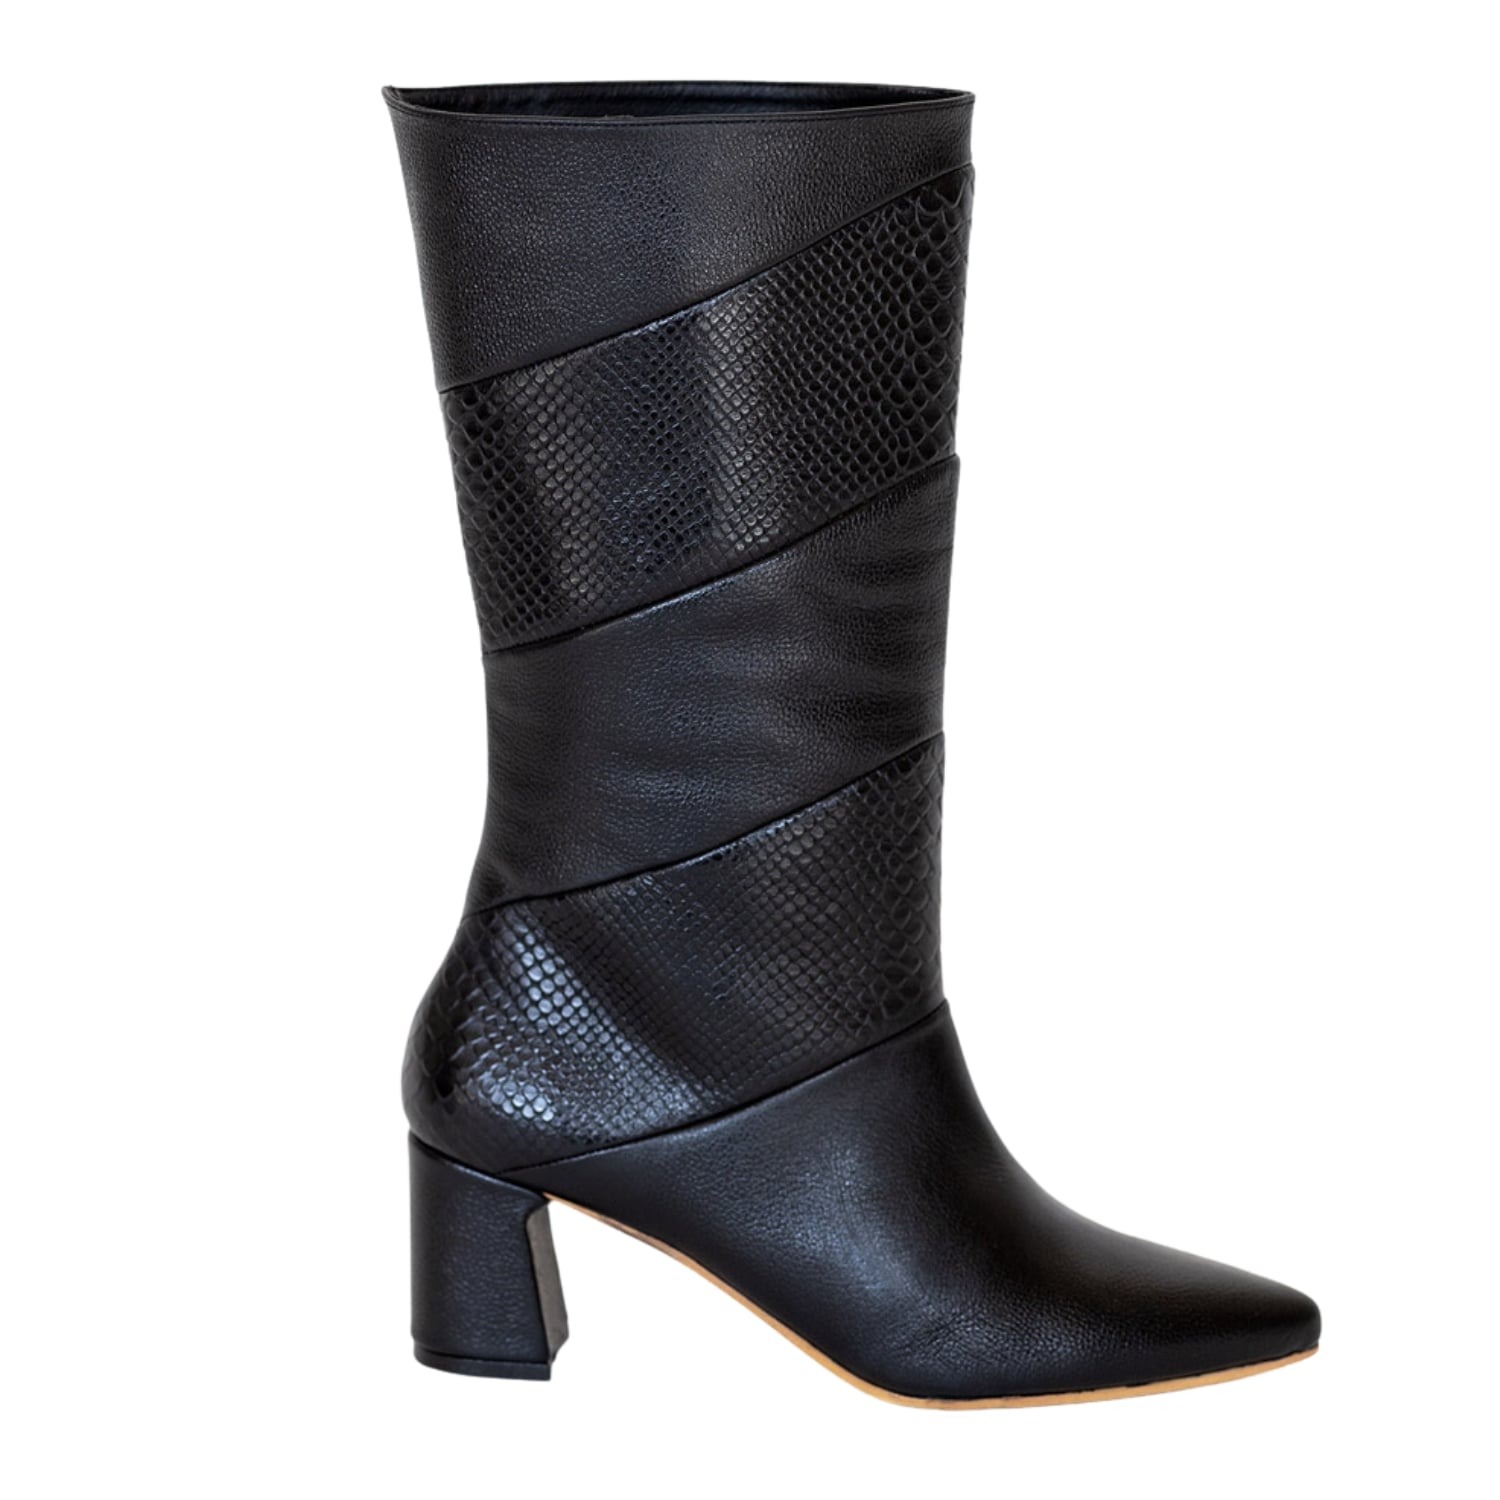 Women’s Ela Boots In Black & Black Croc Embossed Leather 5 Uk Stivali New York